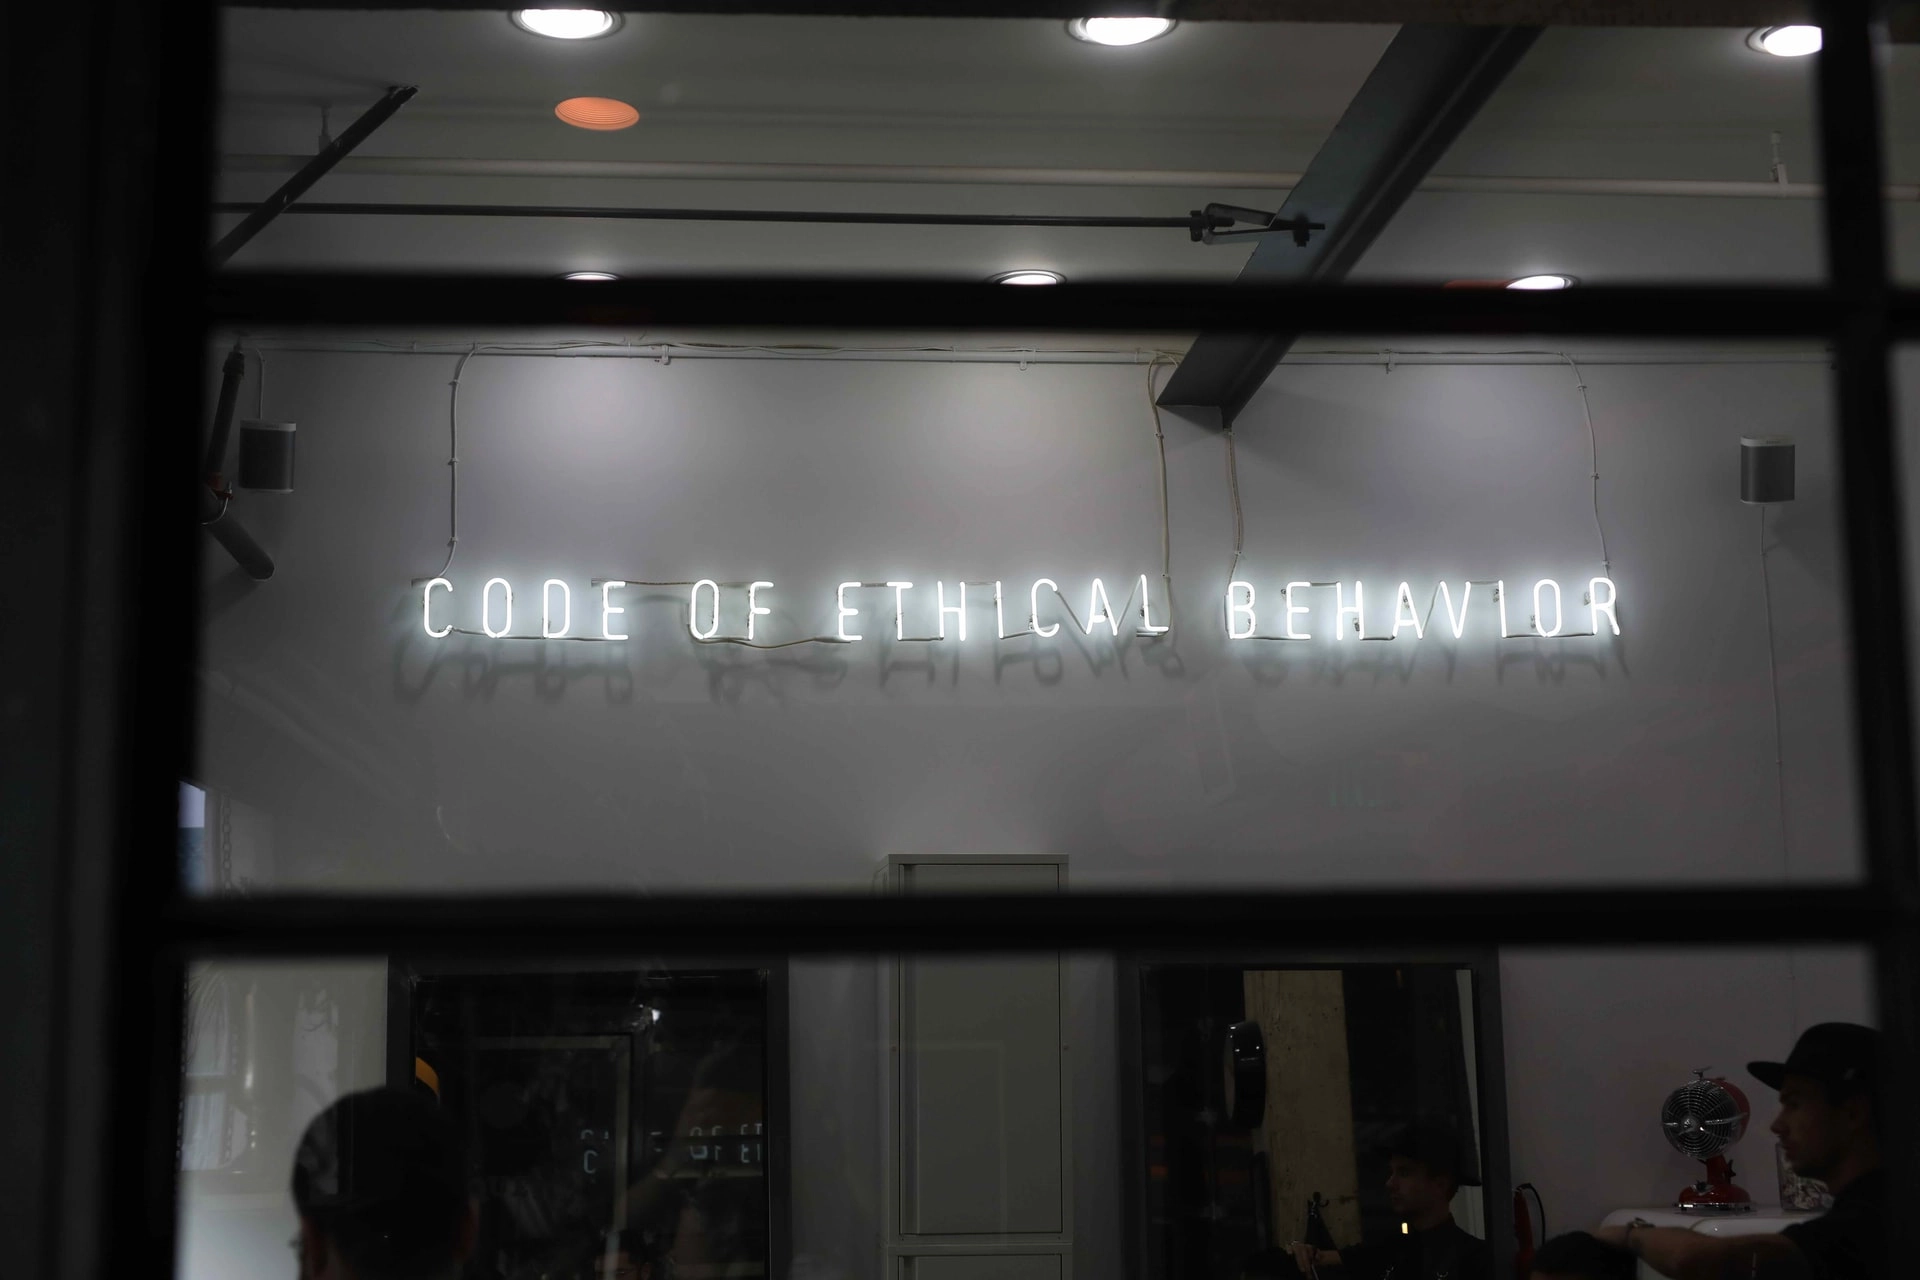 'Code of ethical behavior' neon sign - photo: Unsplash